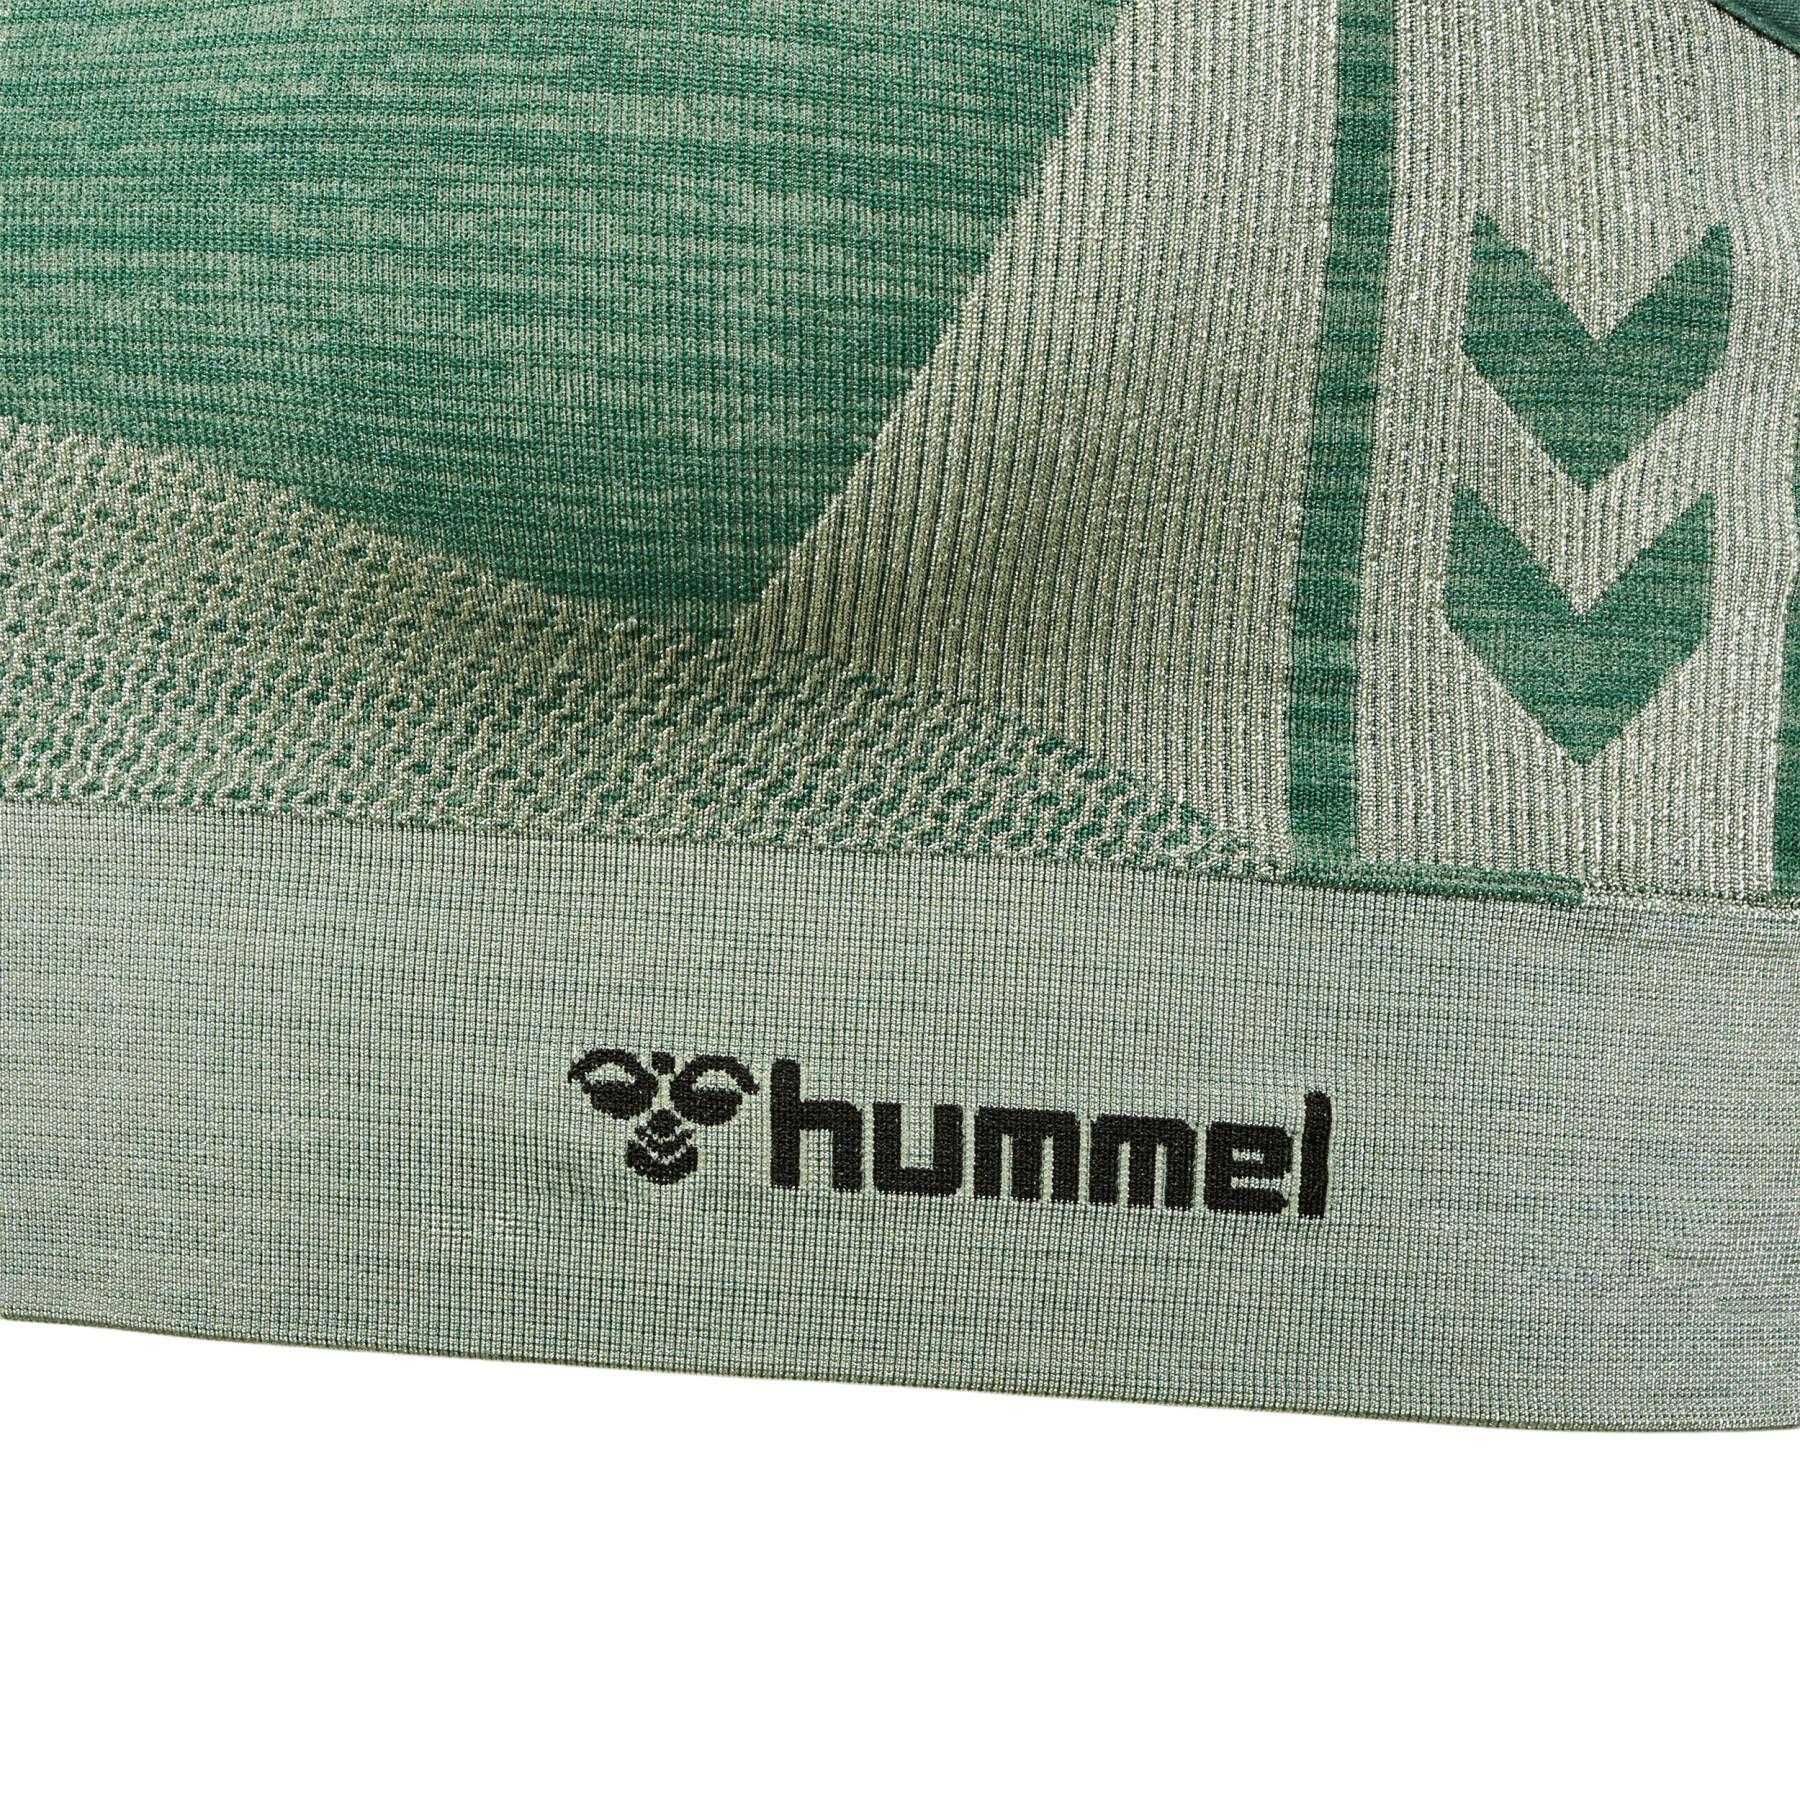 Seamless sports bra for women Hummel Clea